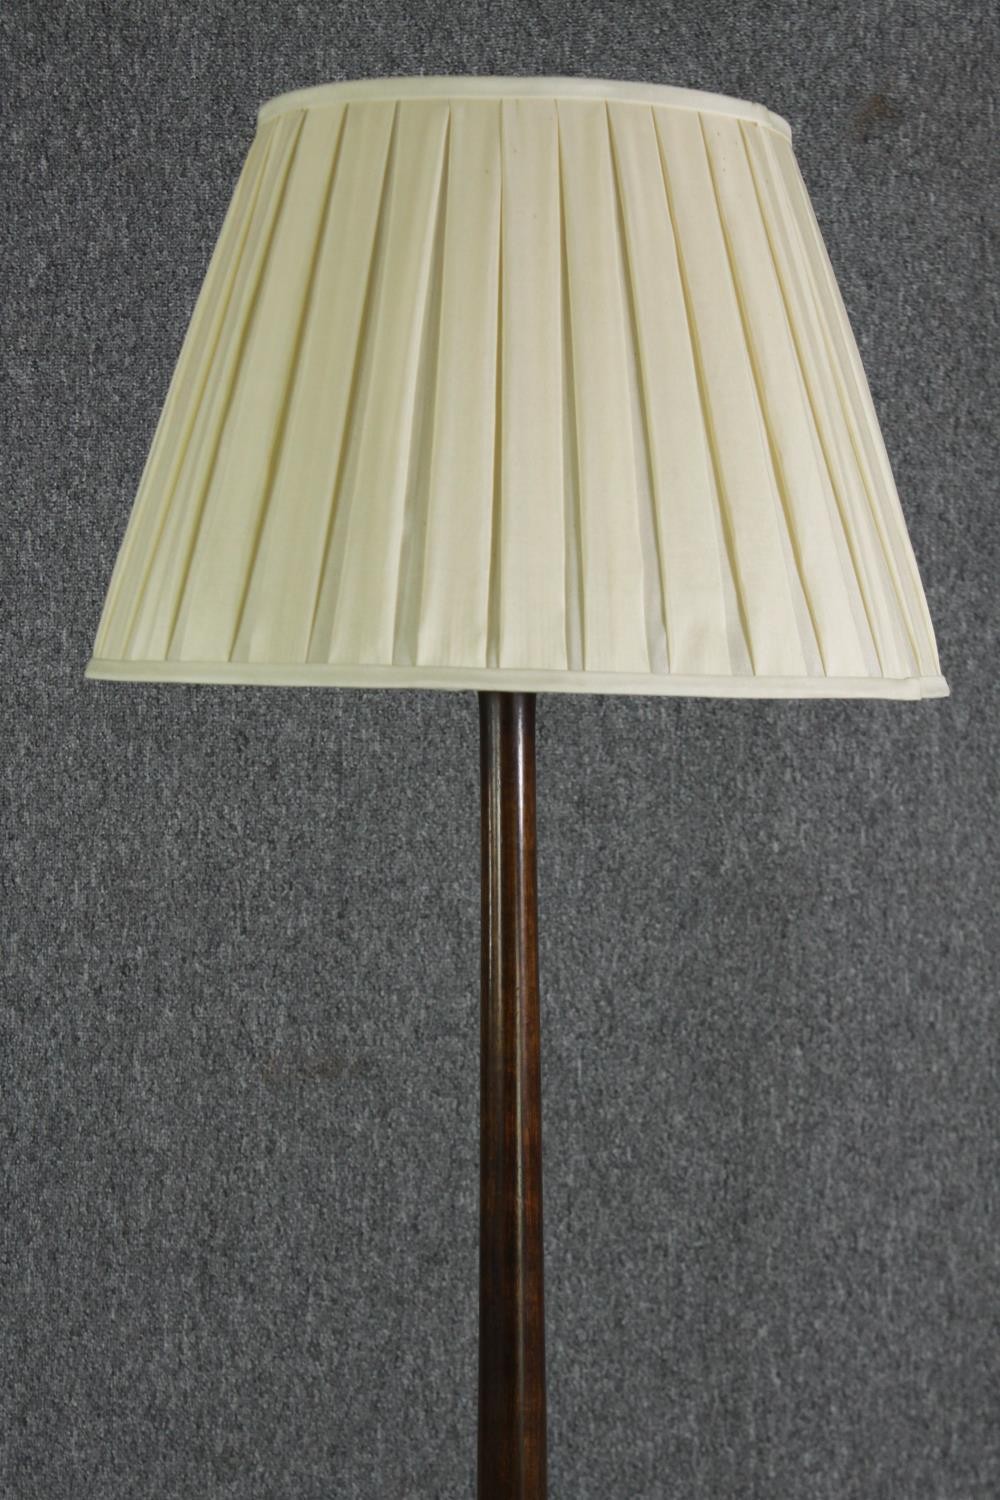 A walnut standard lamp, 20th century. H.183cm. - Image 2 of 3